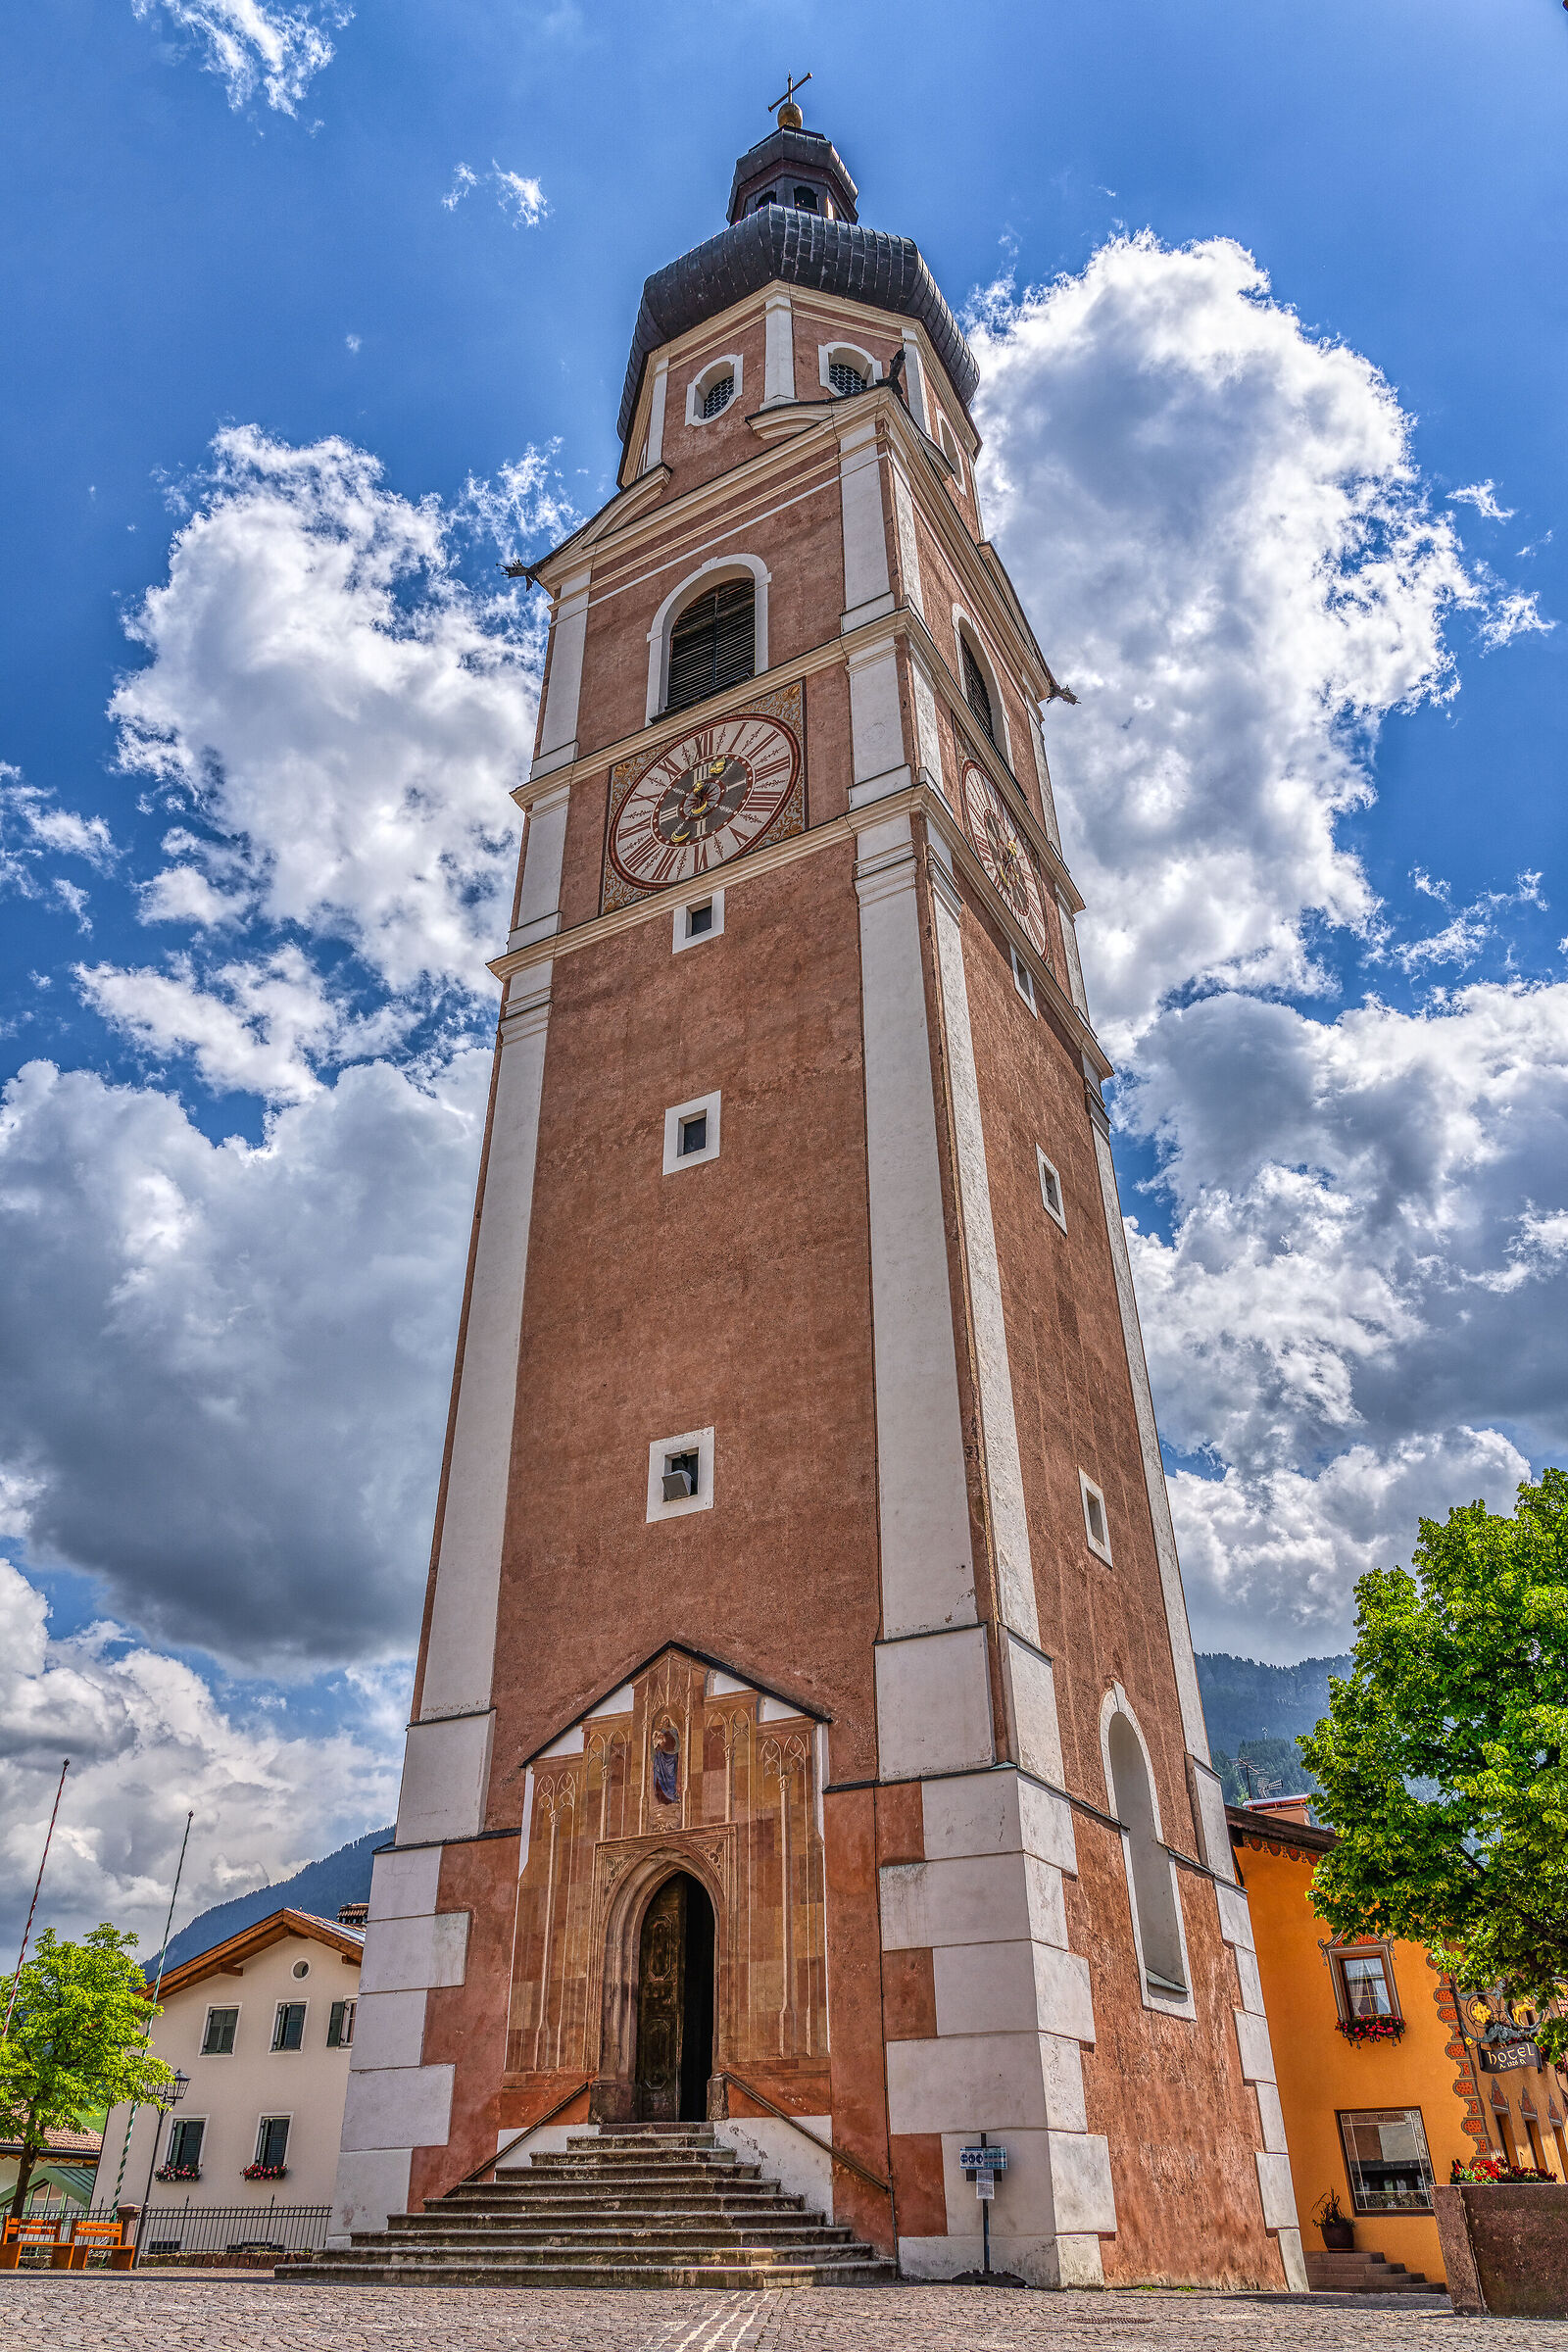 Castelrotto Bell Tower...